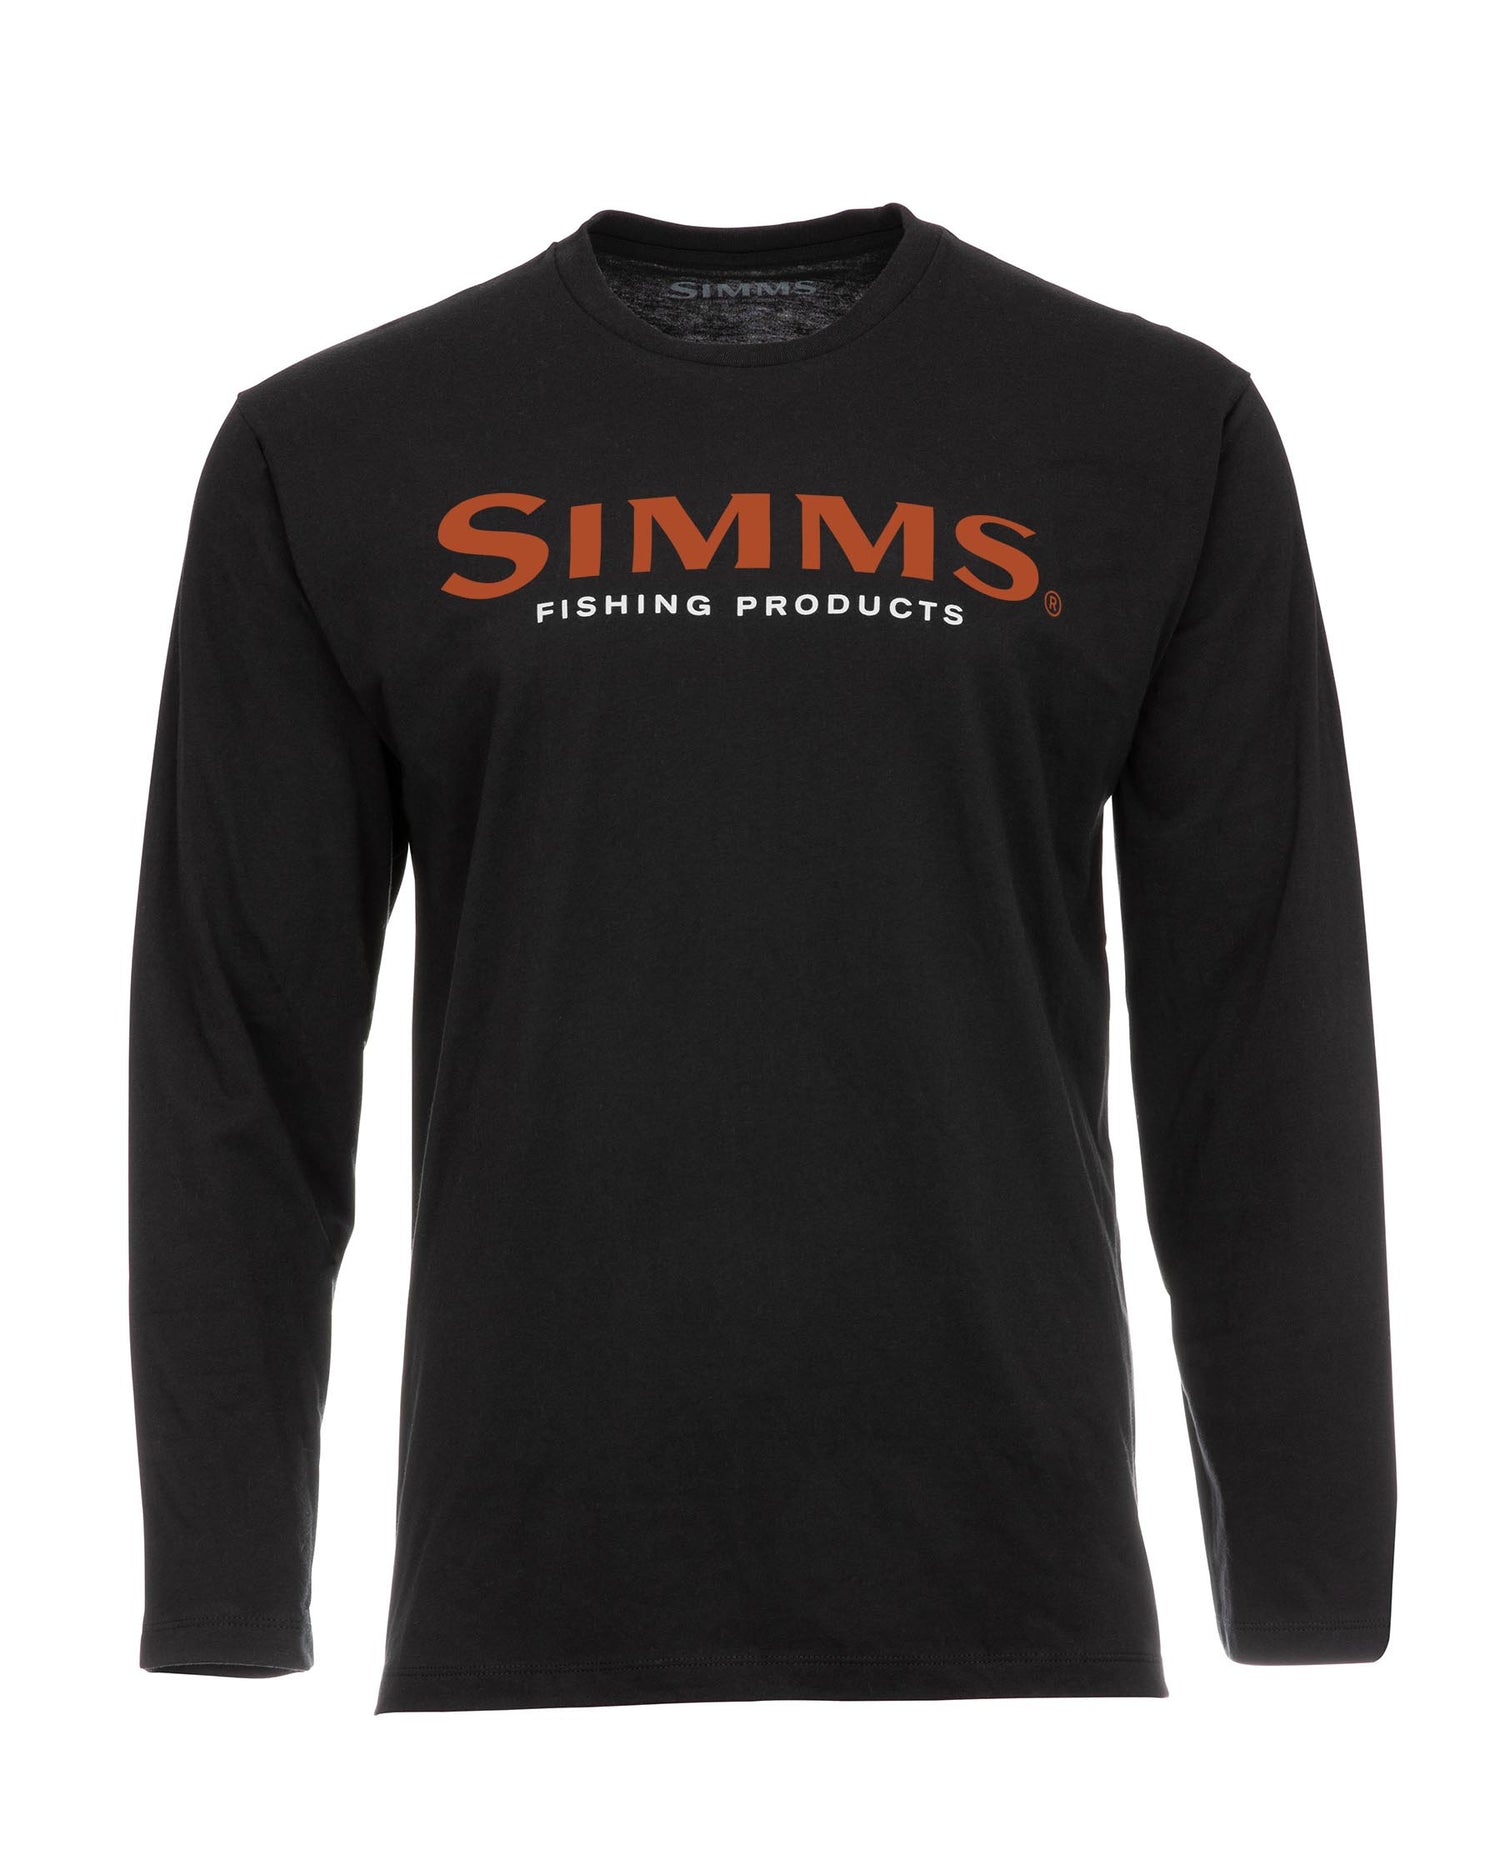    13626-001-ms-simms-logo-ls-shirt-black